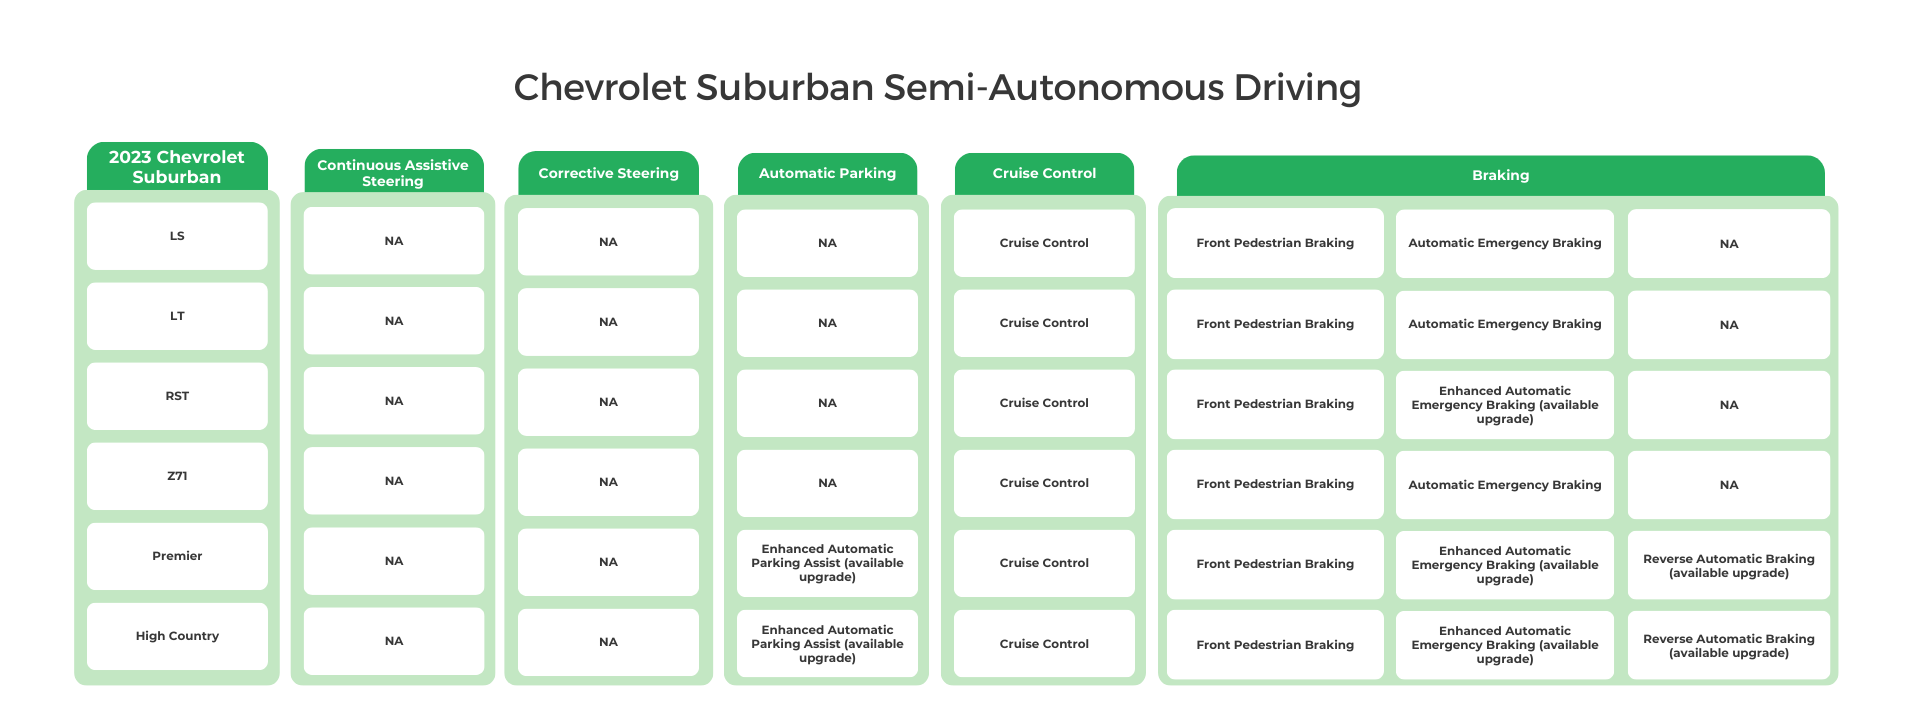 2023 Chevrolet Suburban Semi-Autonomous Driving